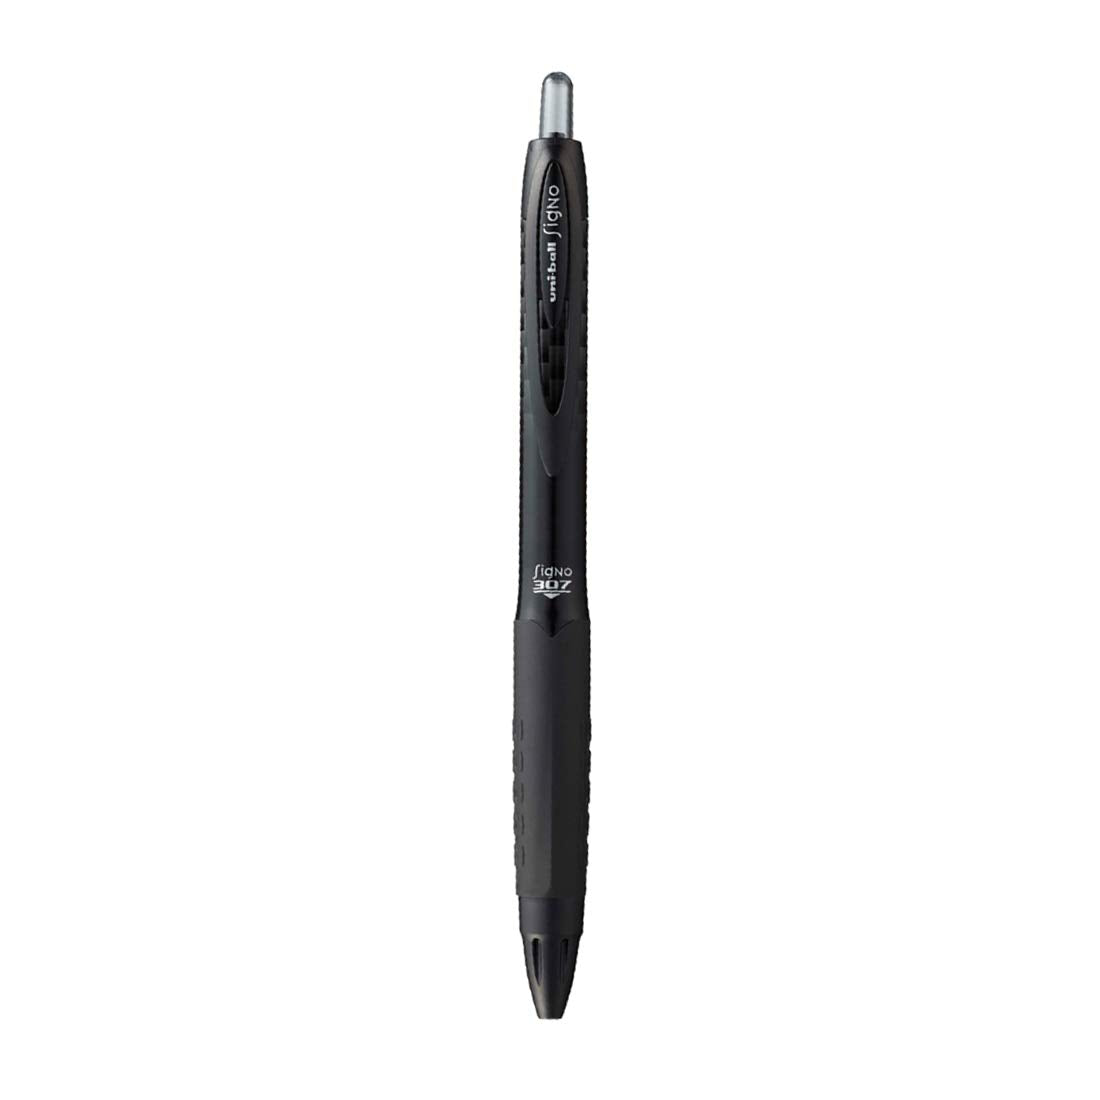 Uniball Signo UMN307 0.7mm Gel Pen - Black Body